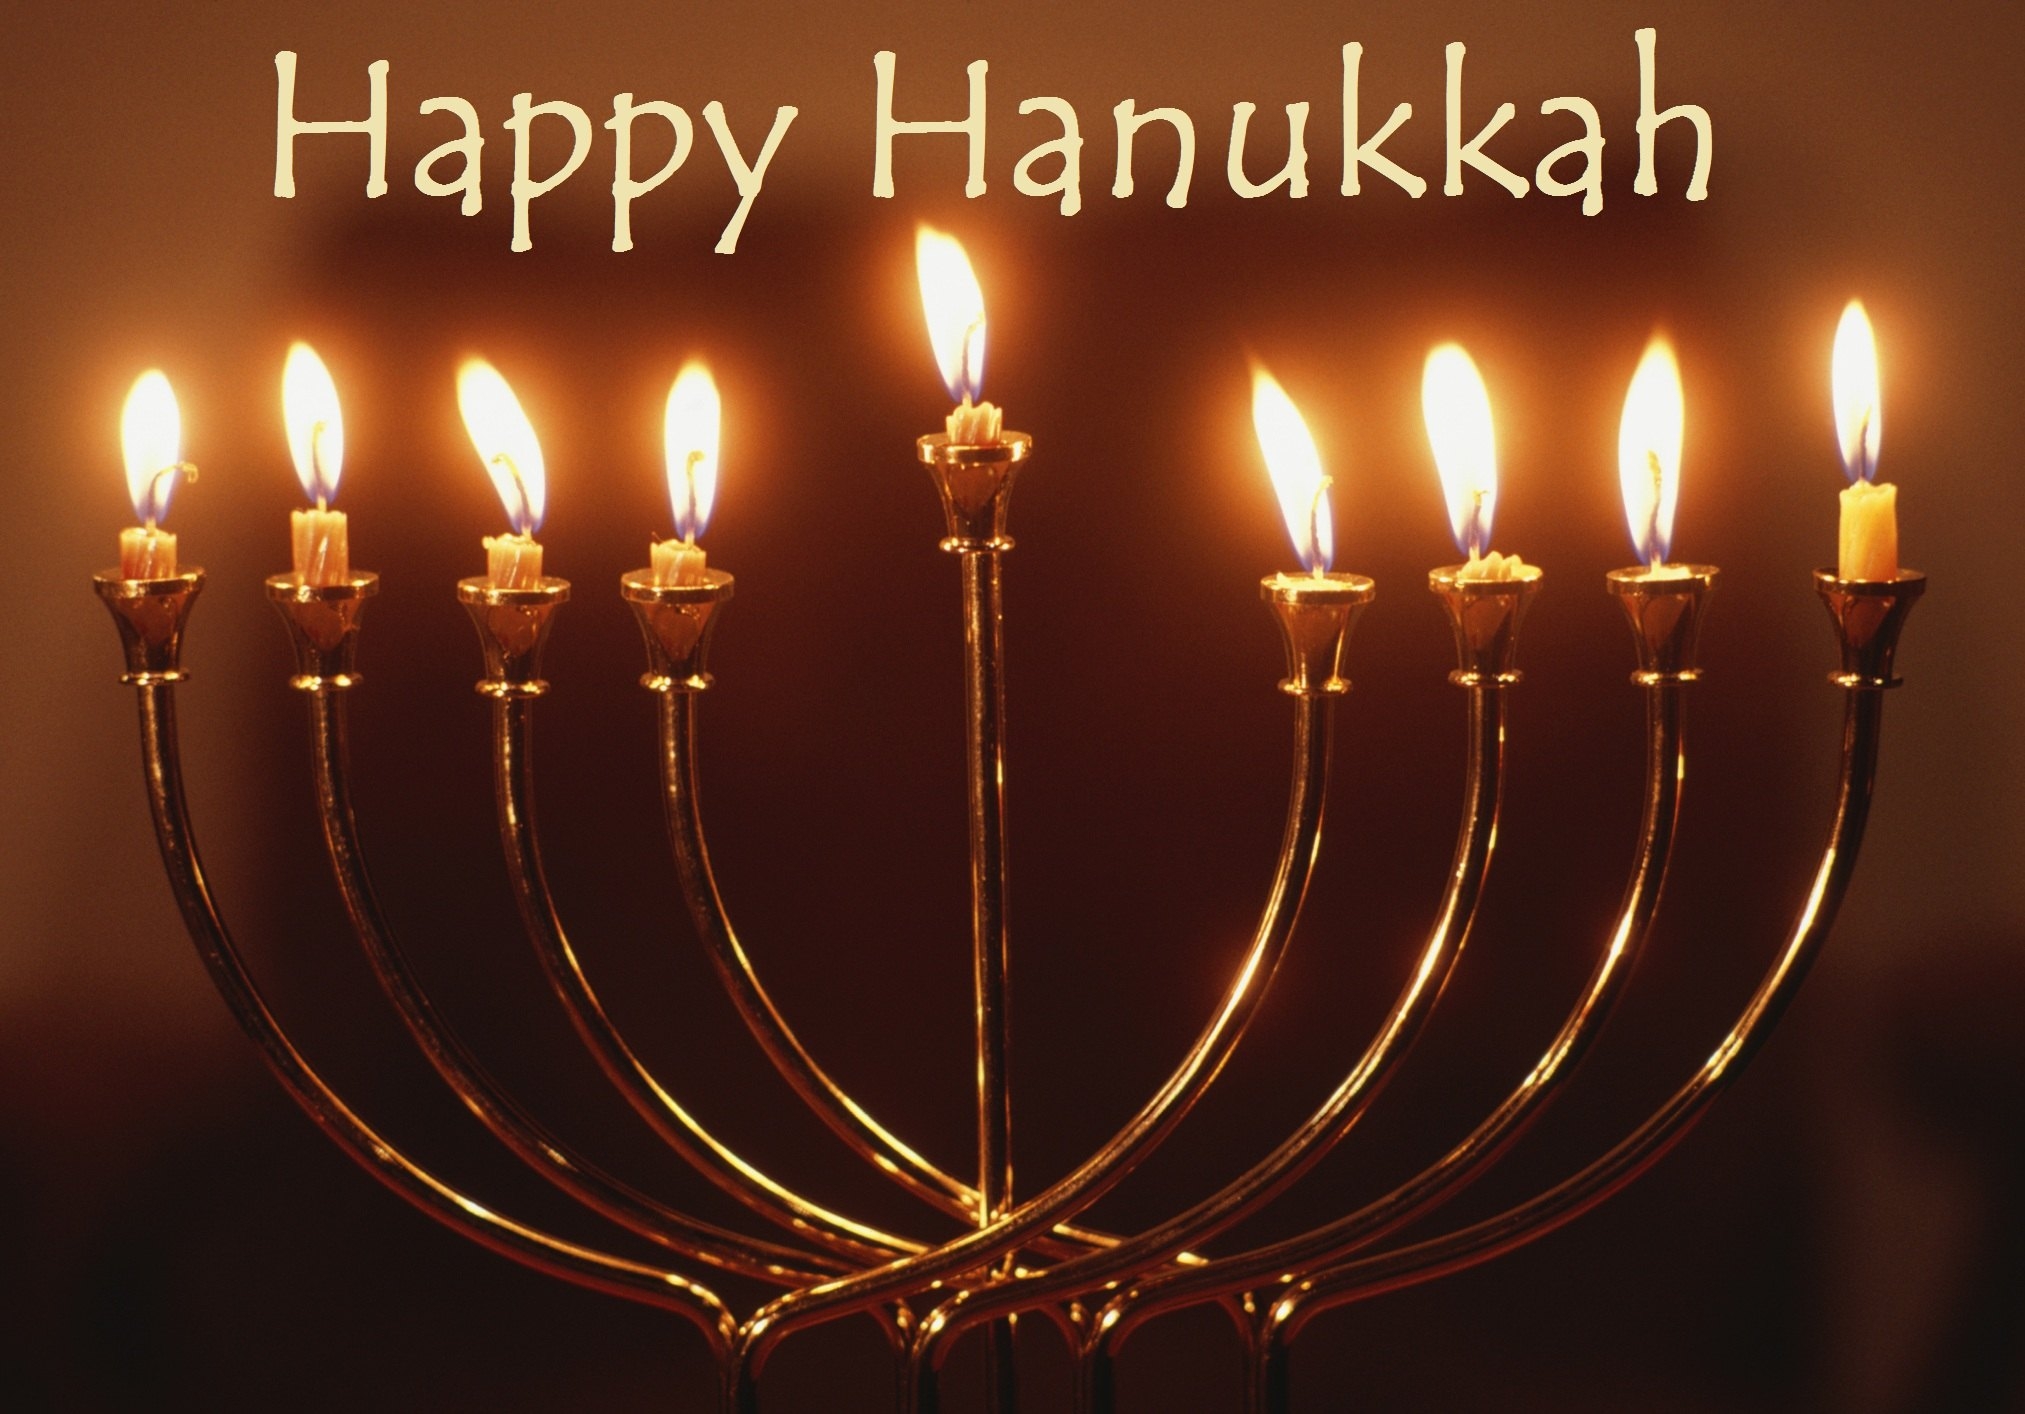 Happy Hanukkah! | Jak's View of Vancouver v.3